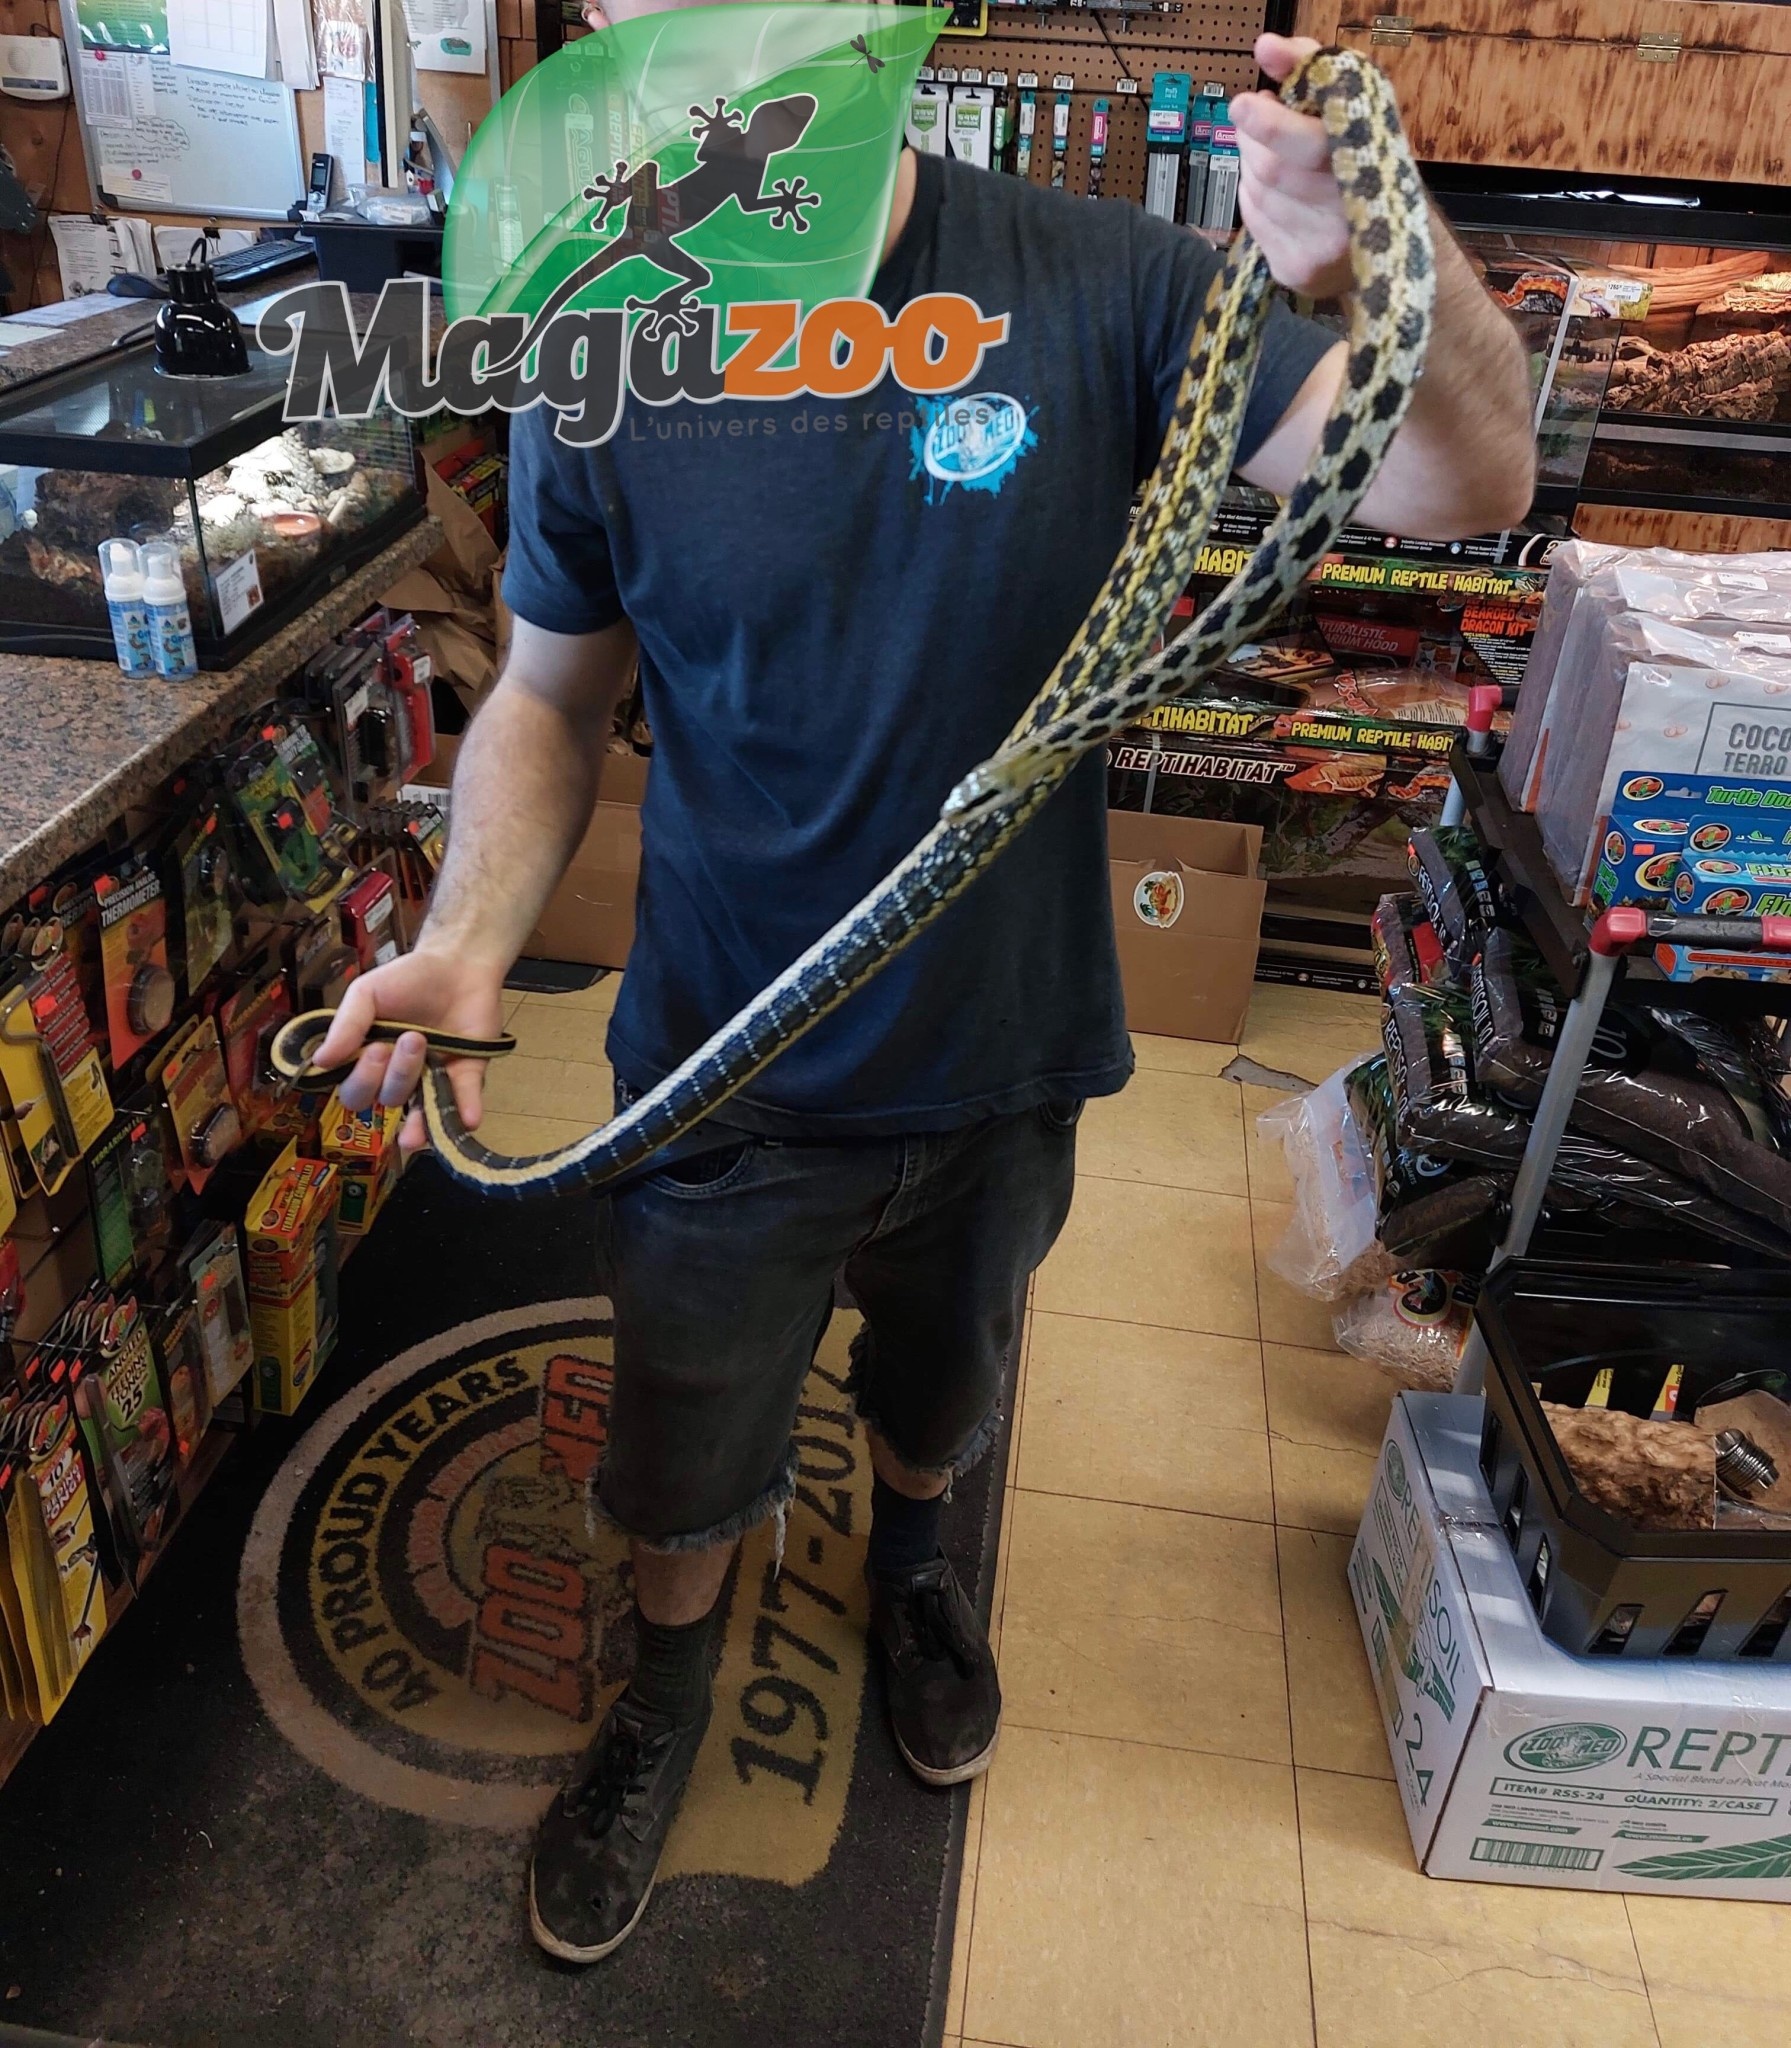 Magazoo Taiwan beauty snake (Male 2.5 years old)